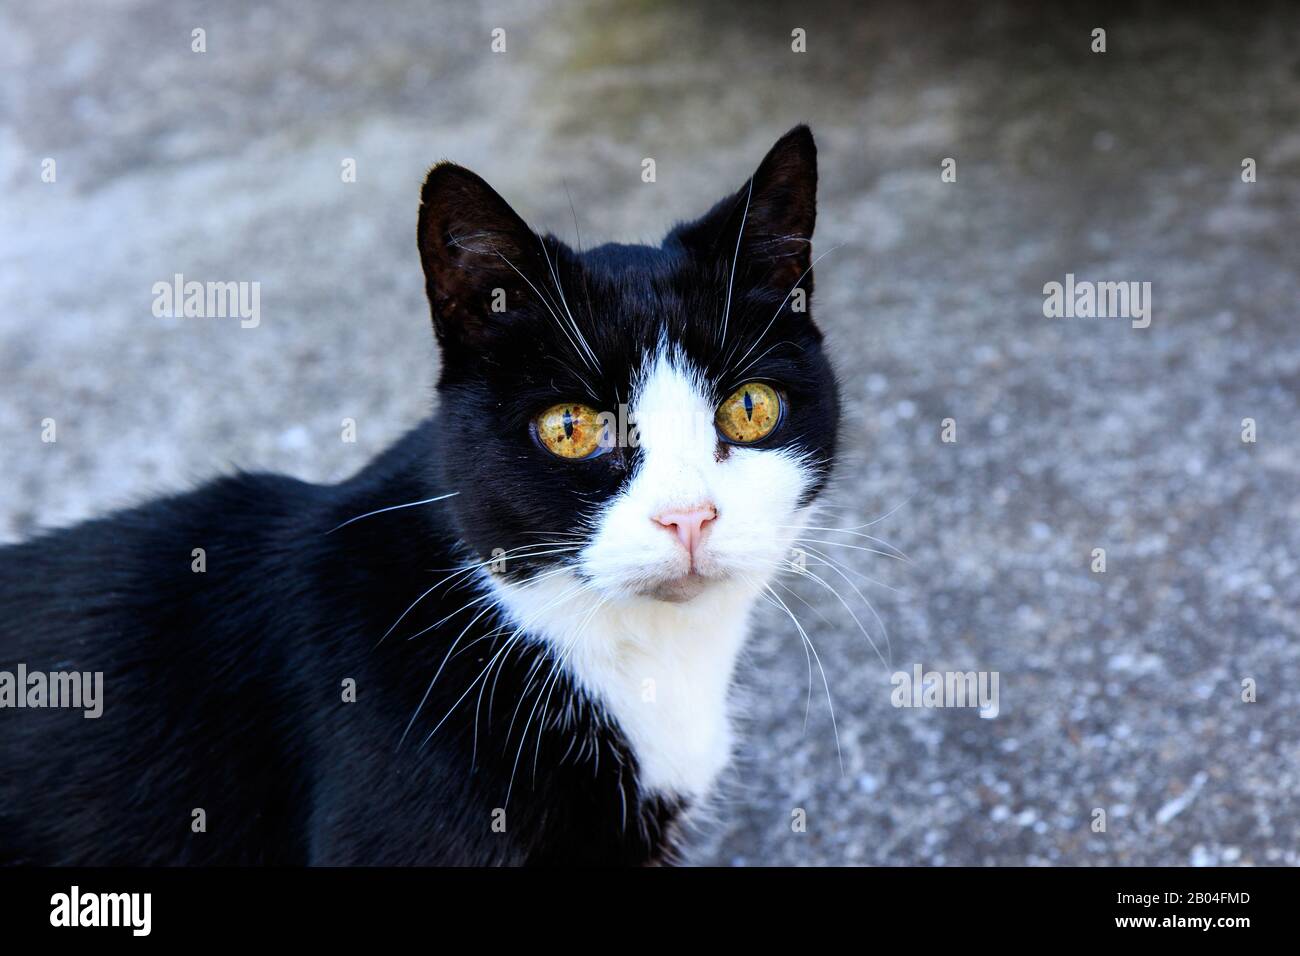 Black & white cat with stunning eyes Stock Photo